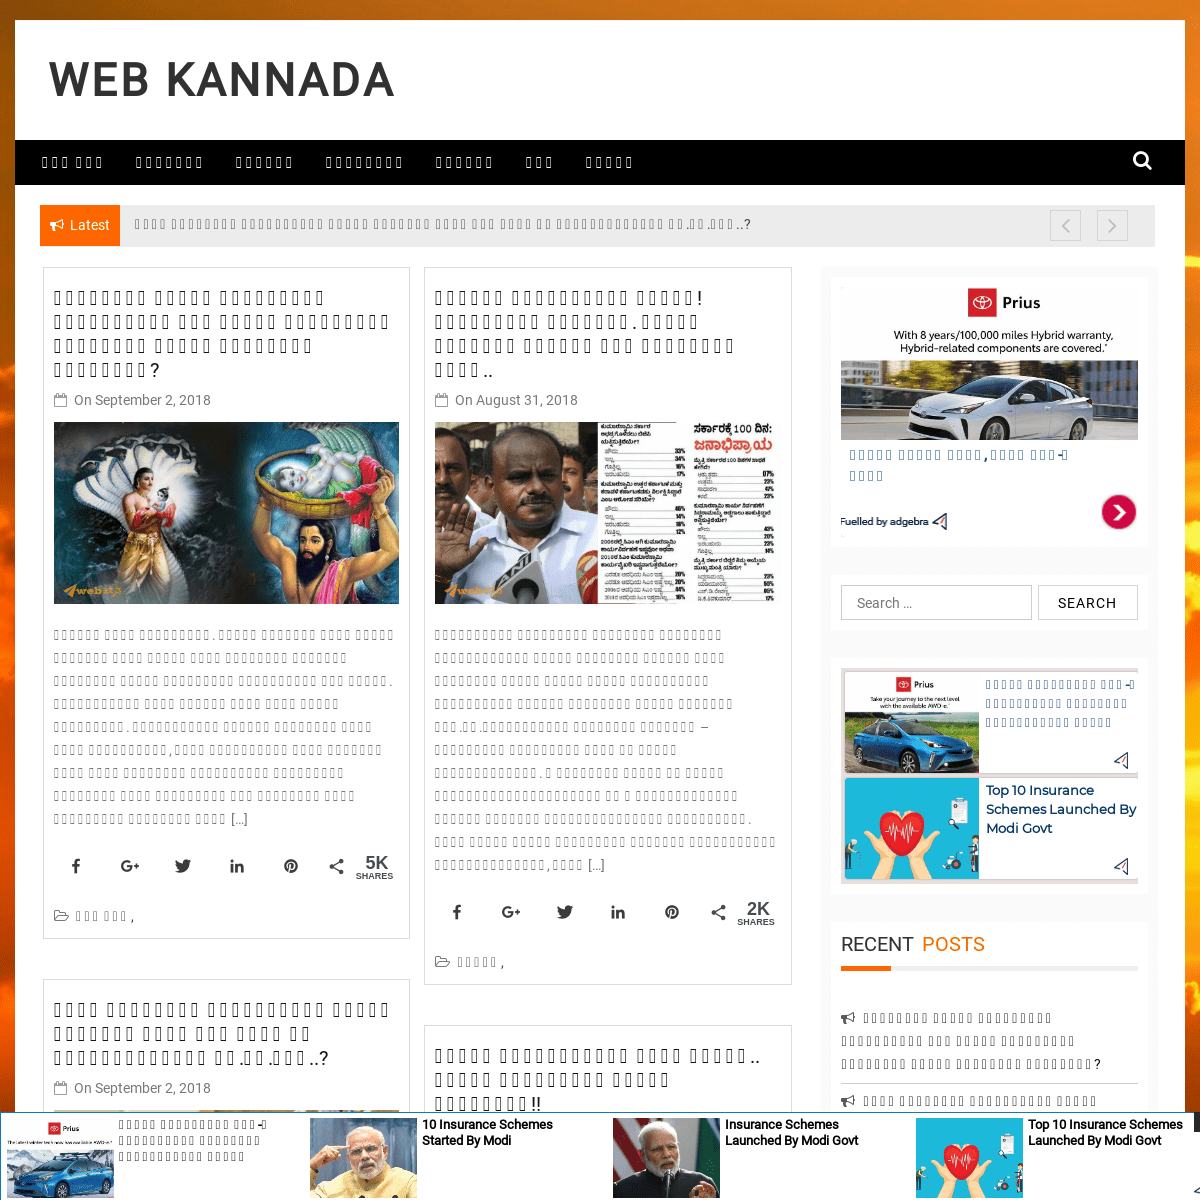 A complete backup of webkannada.com